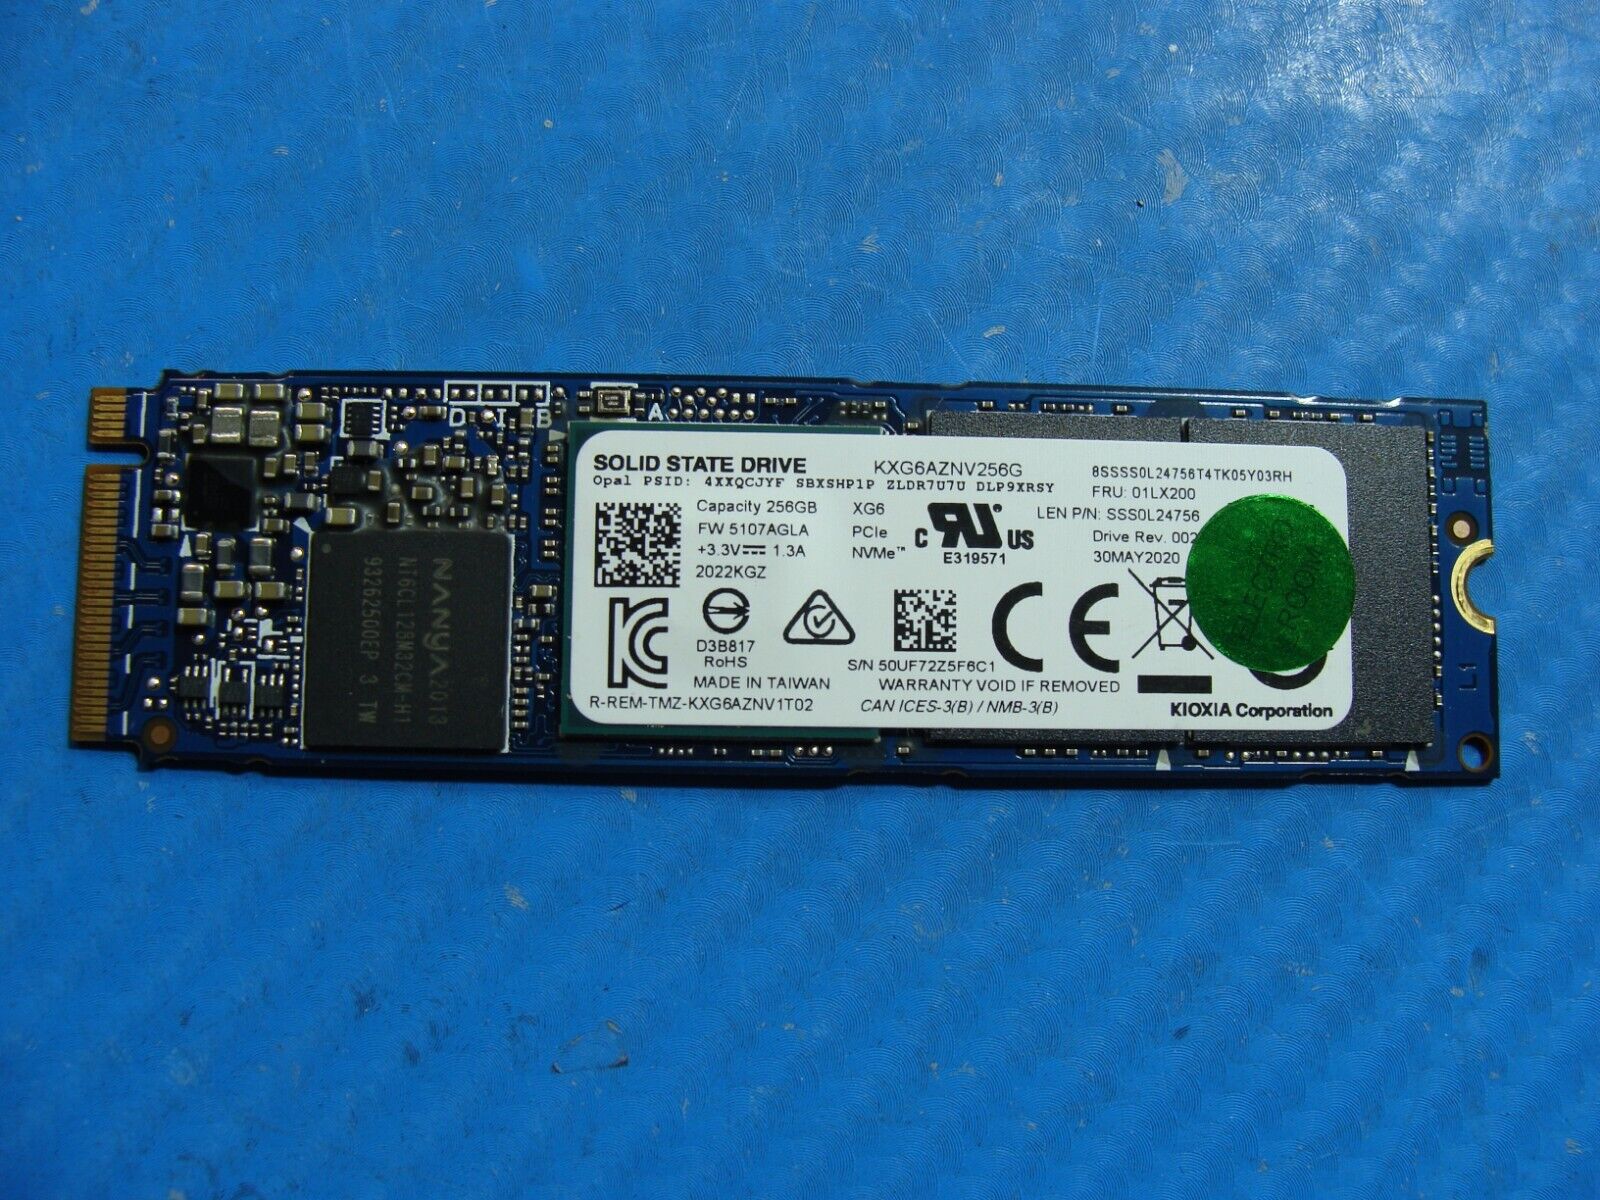 Lenovo X1 Carbon 9th Gen Kioxia 256GB NVMe SSD Solid State Drive KXG6AZNV256G